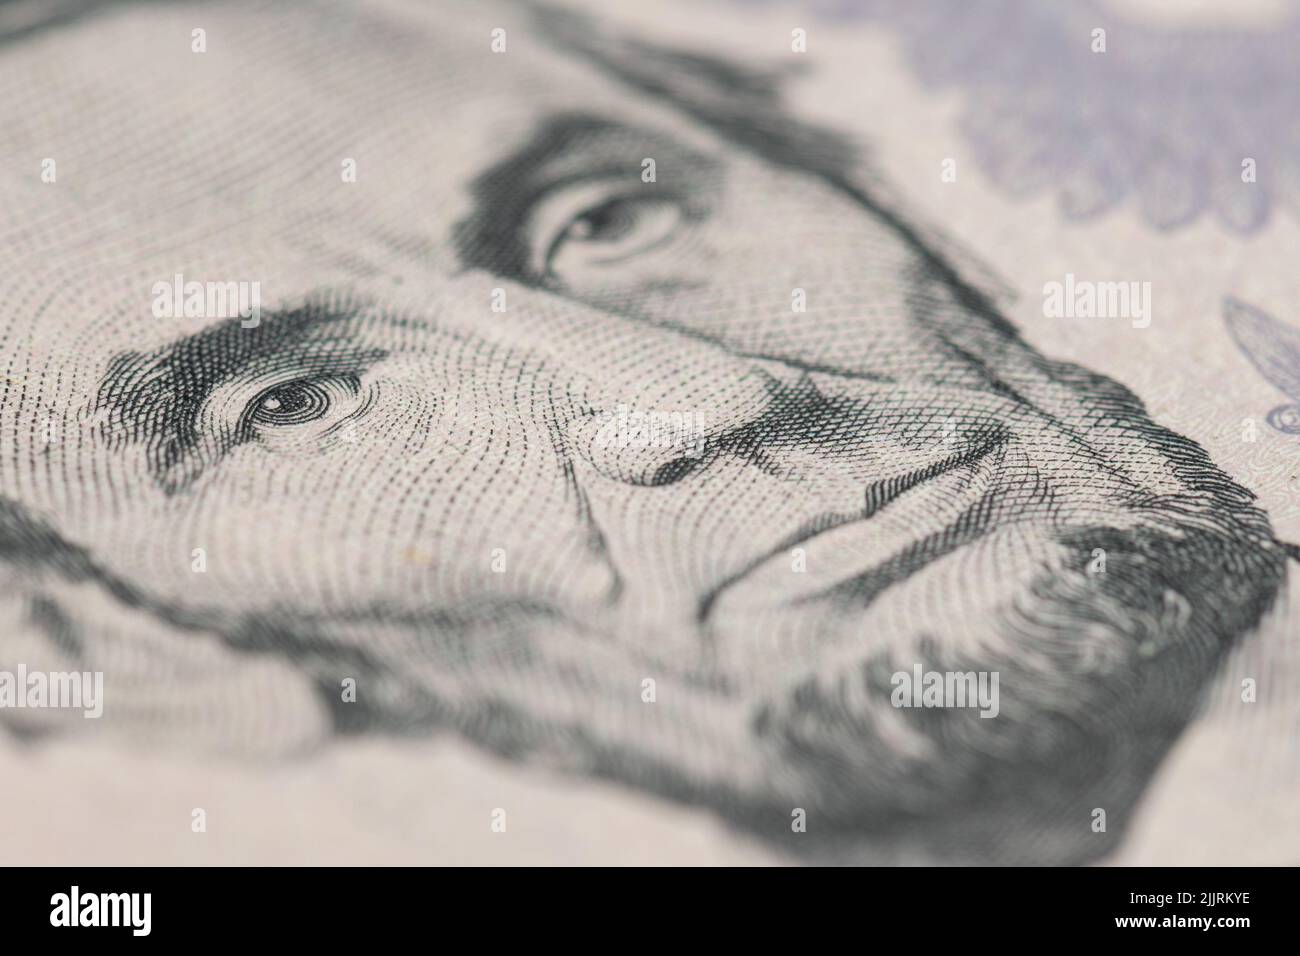 5 dollar bill close up, Portrait of Abraham Lincoln. U.S. president Stock Photo